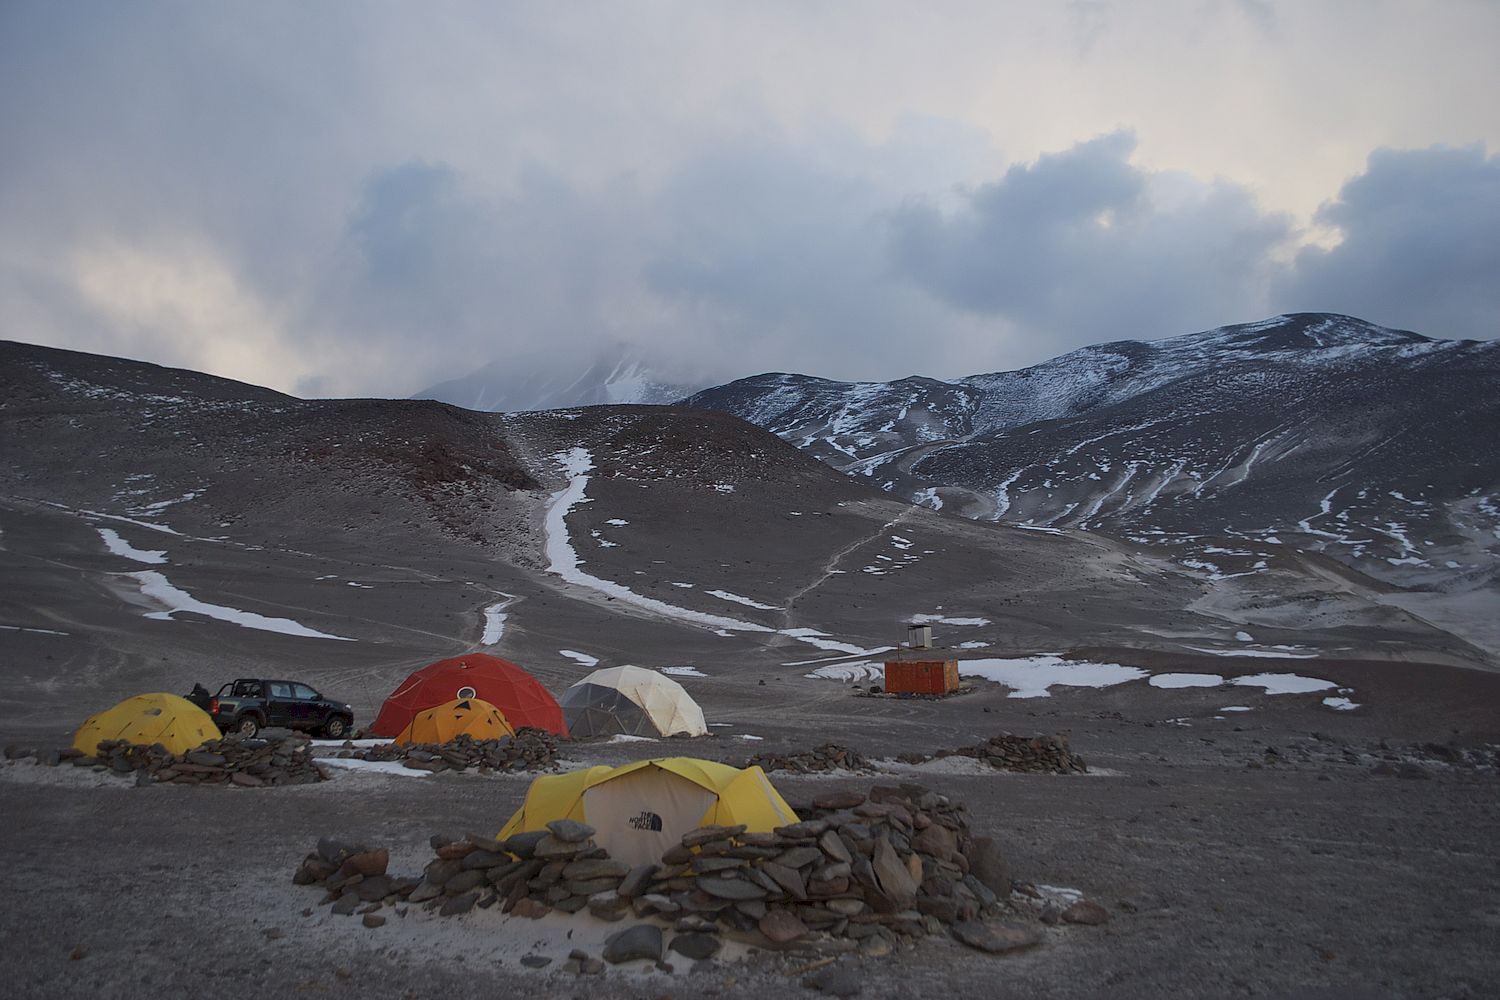 High altitude camp of the Ojos del Salado - Chile Montaña Expedition 2017.